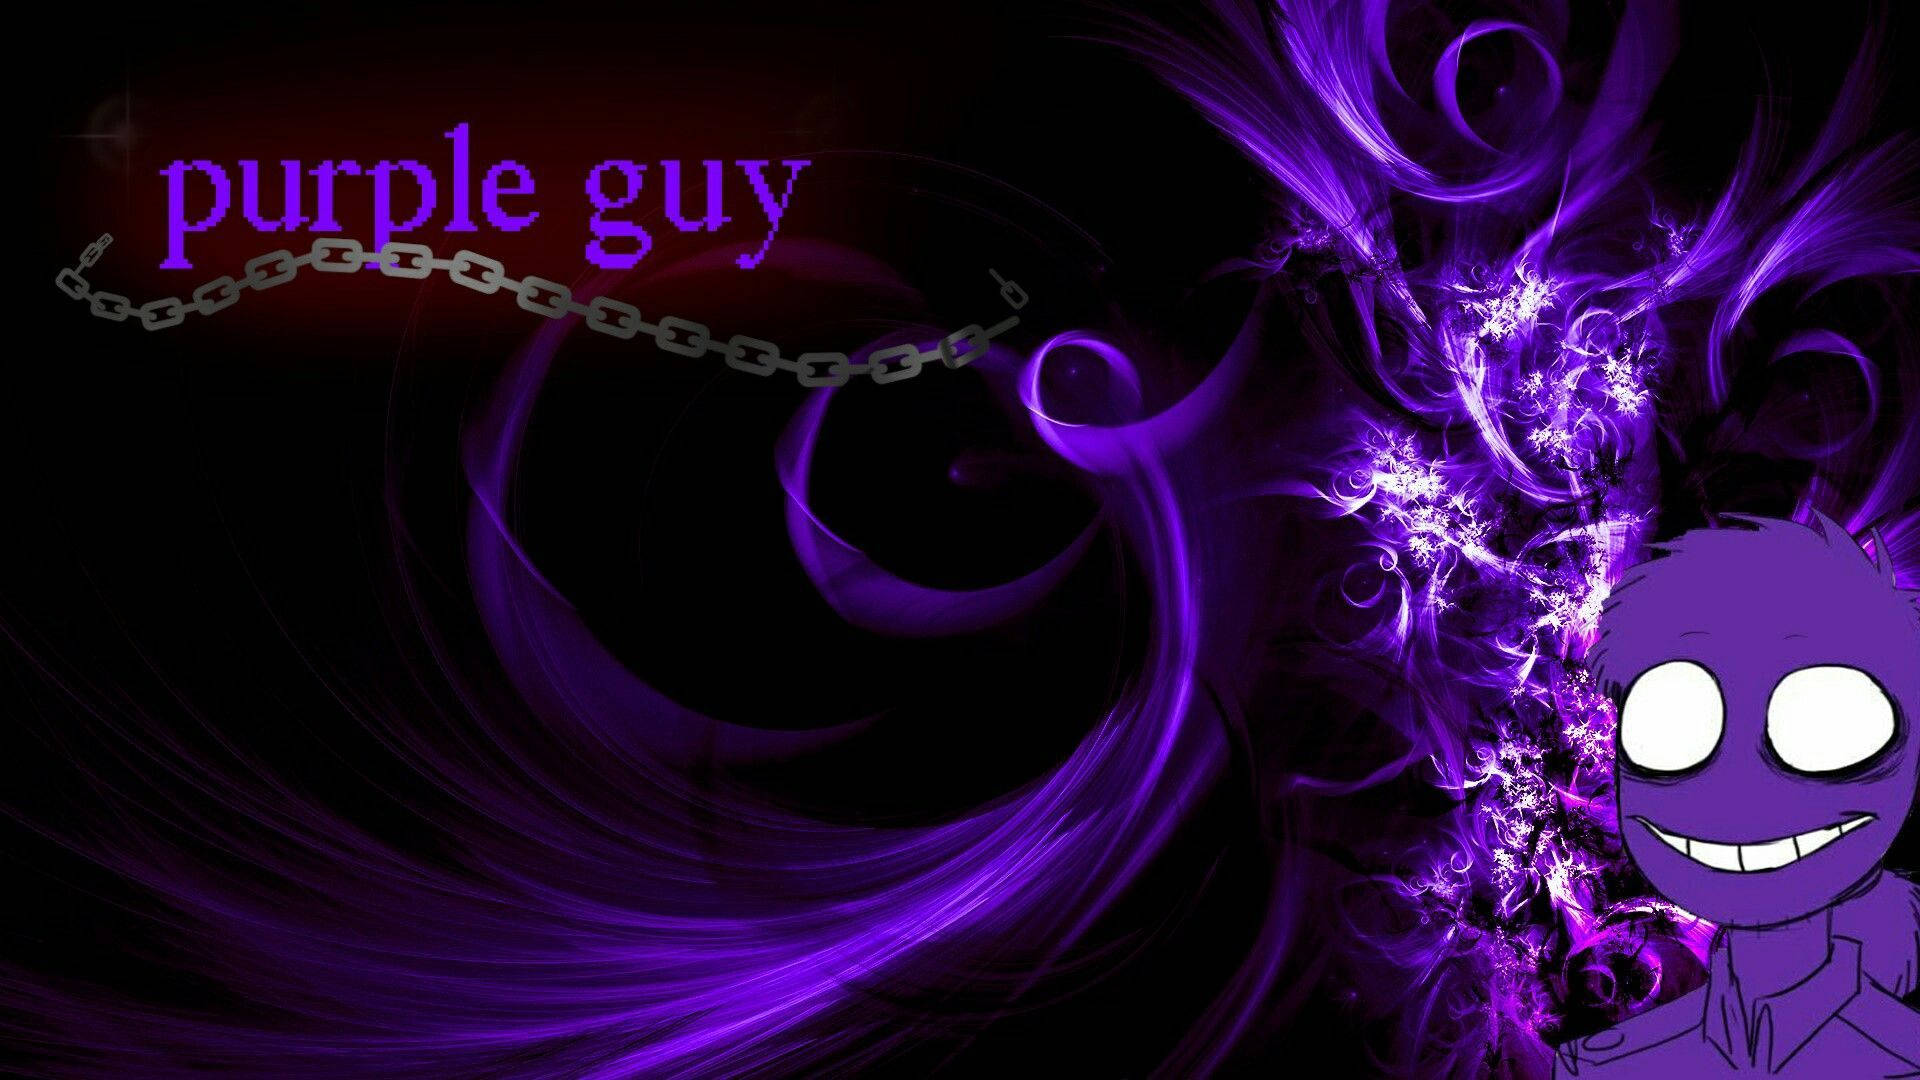 Fnaf Purple Guy Splash Art Wallpaper